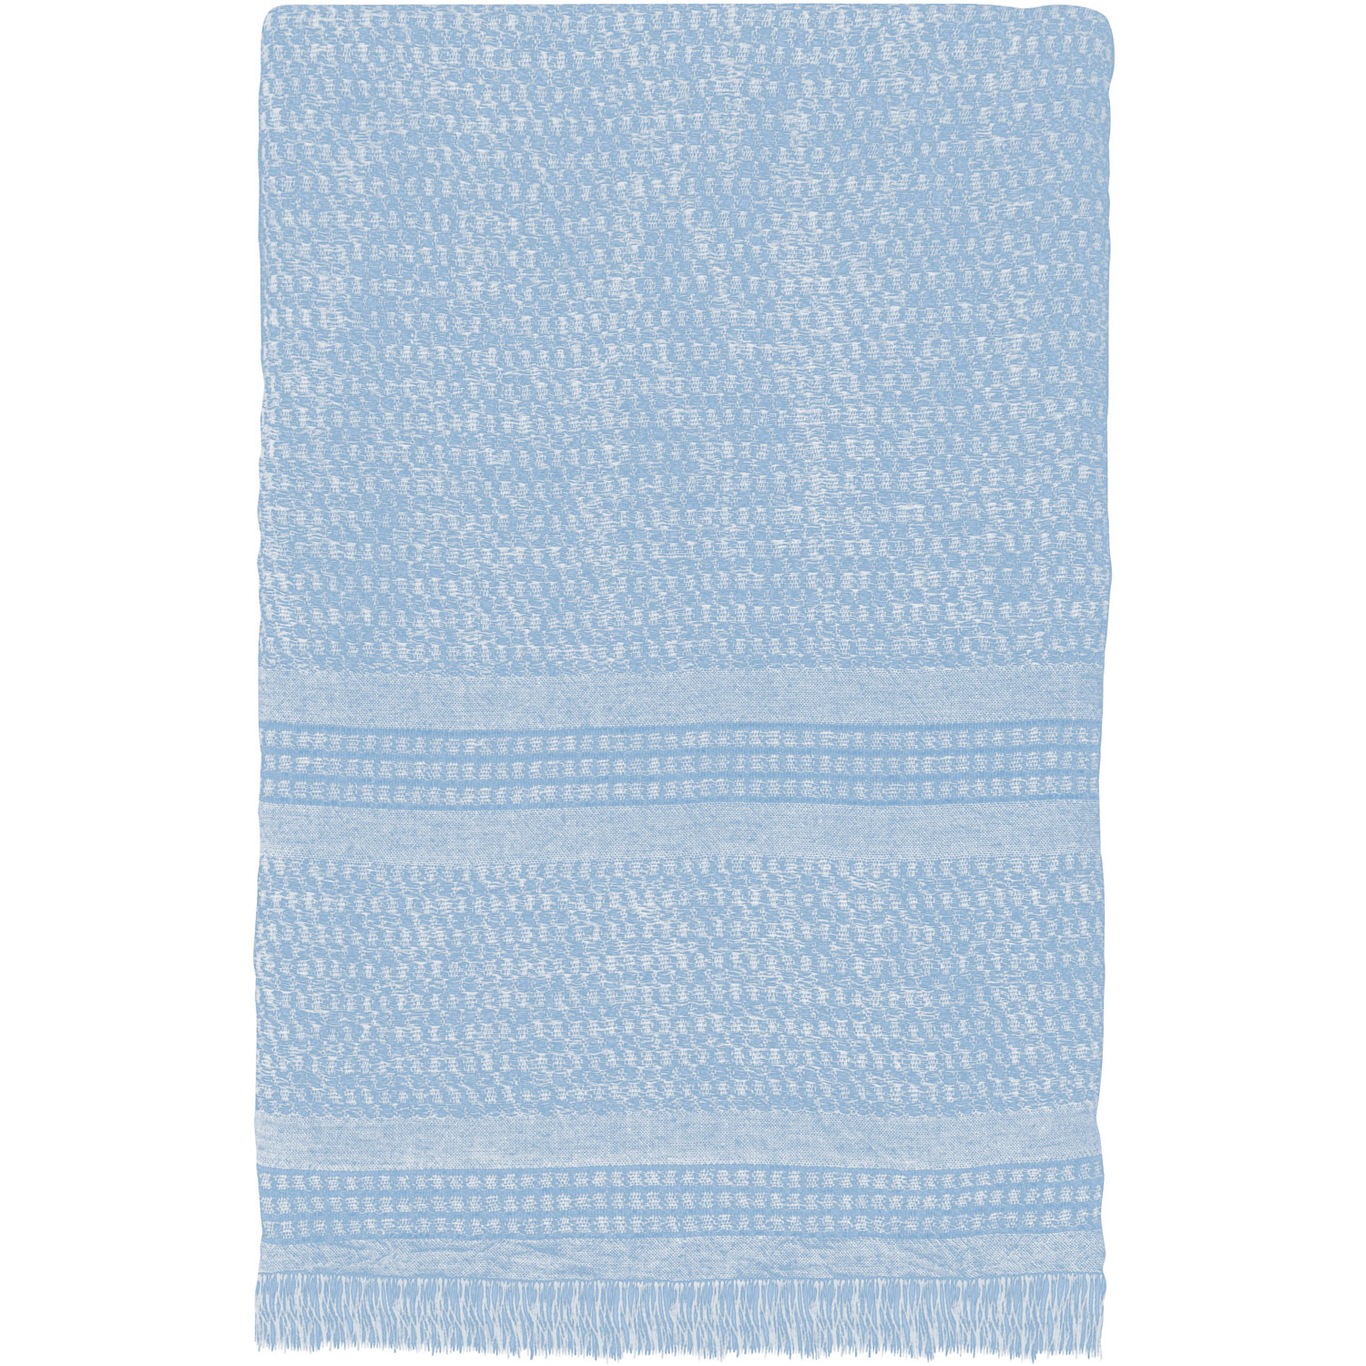 Bodrum Towel, Light Blue